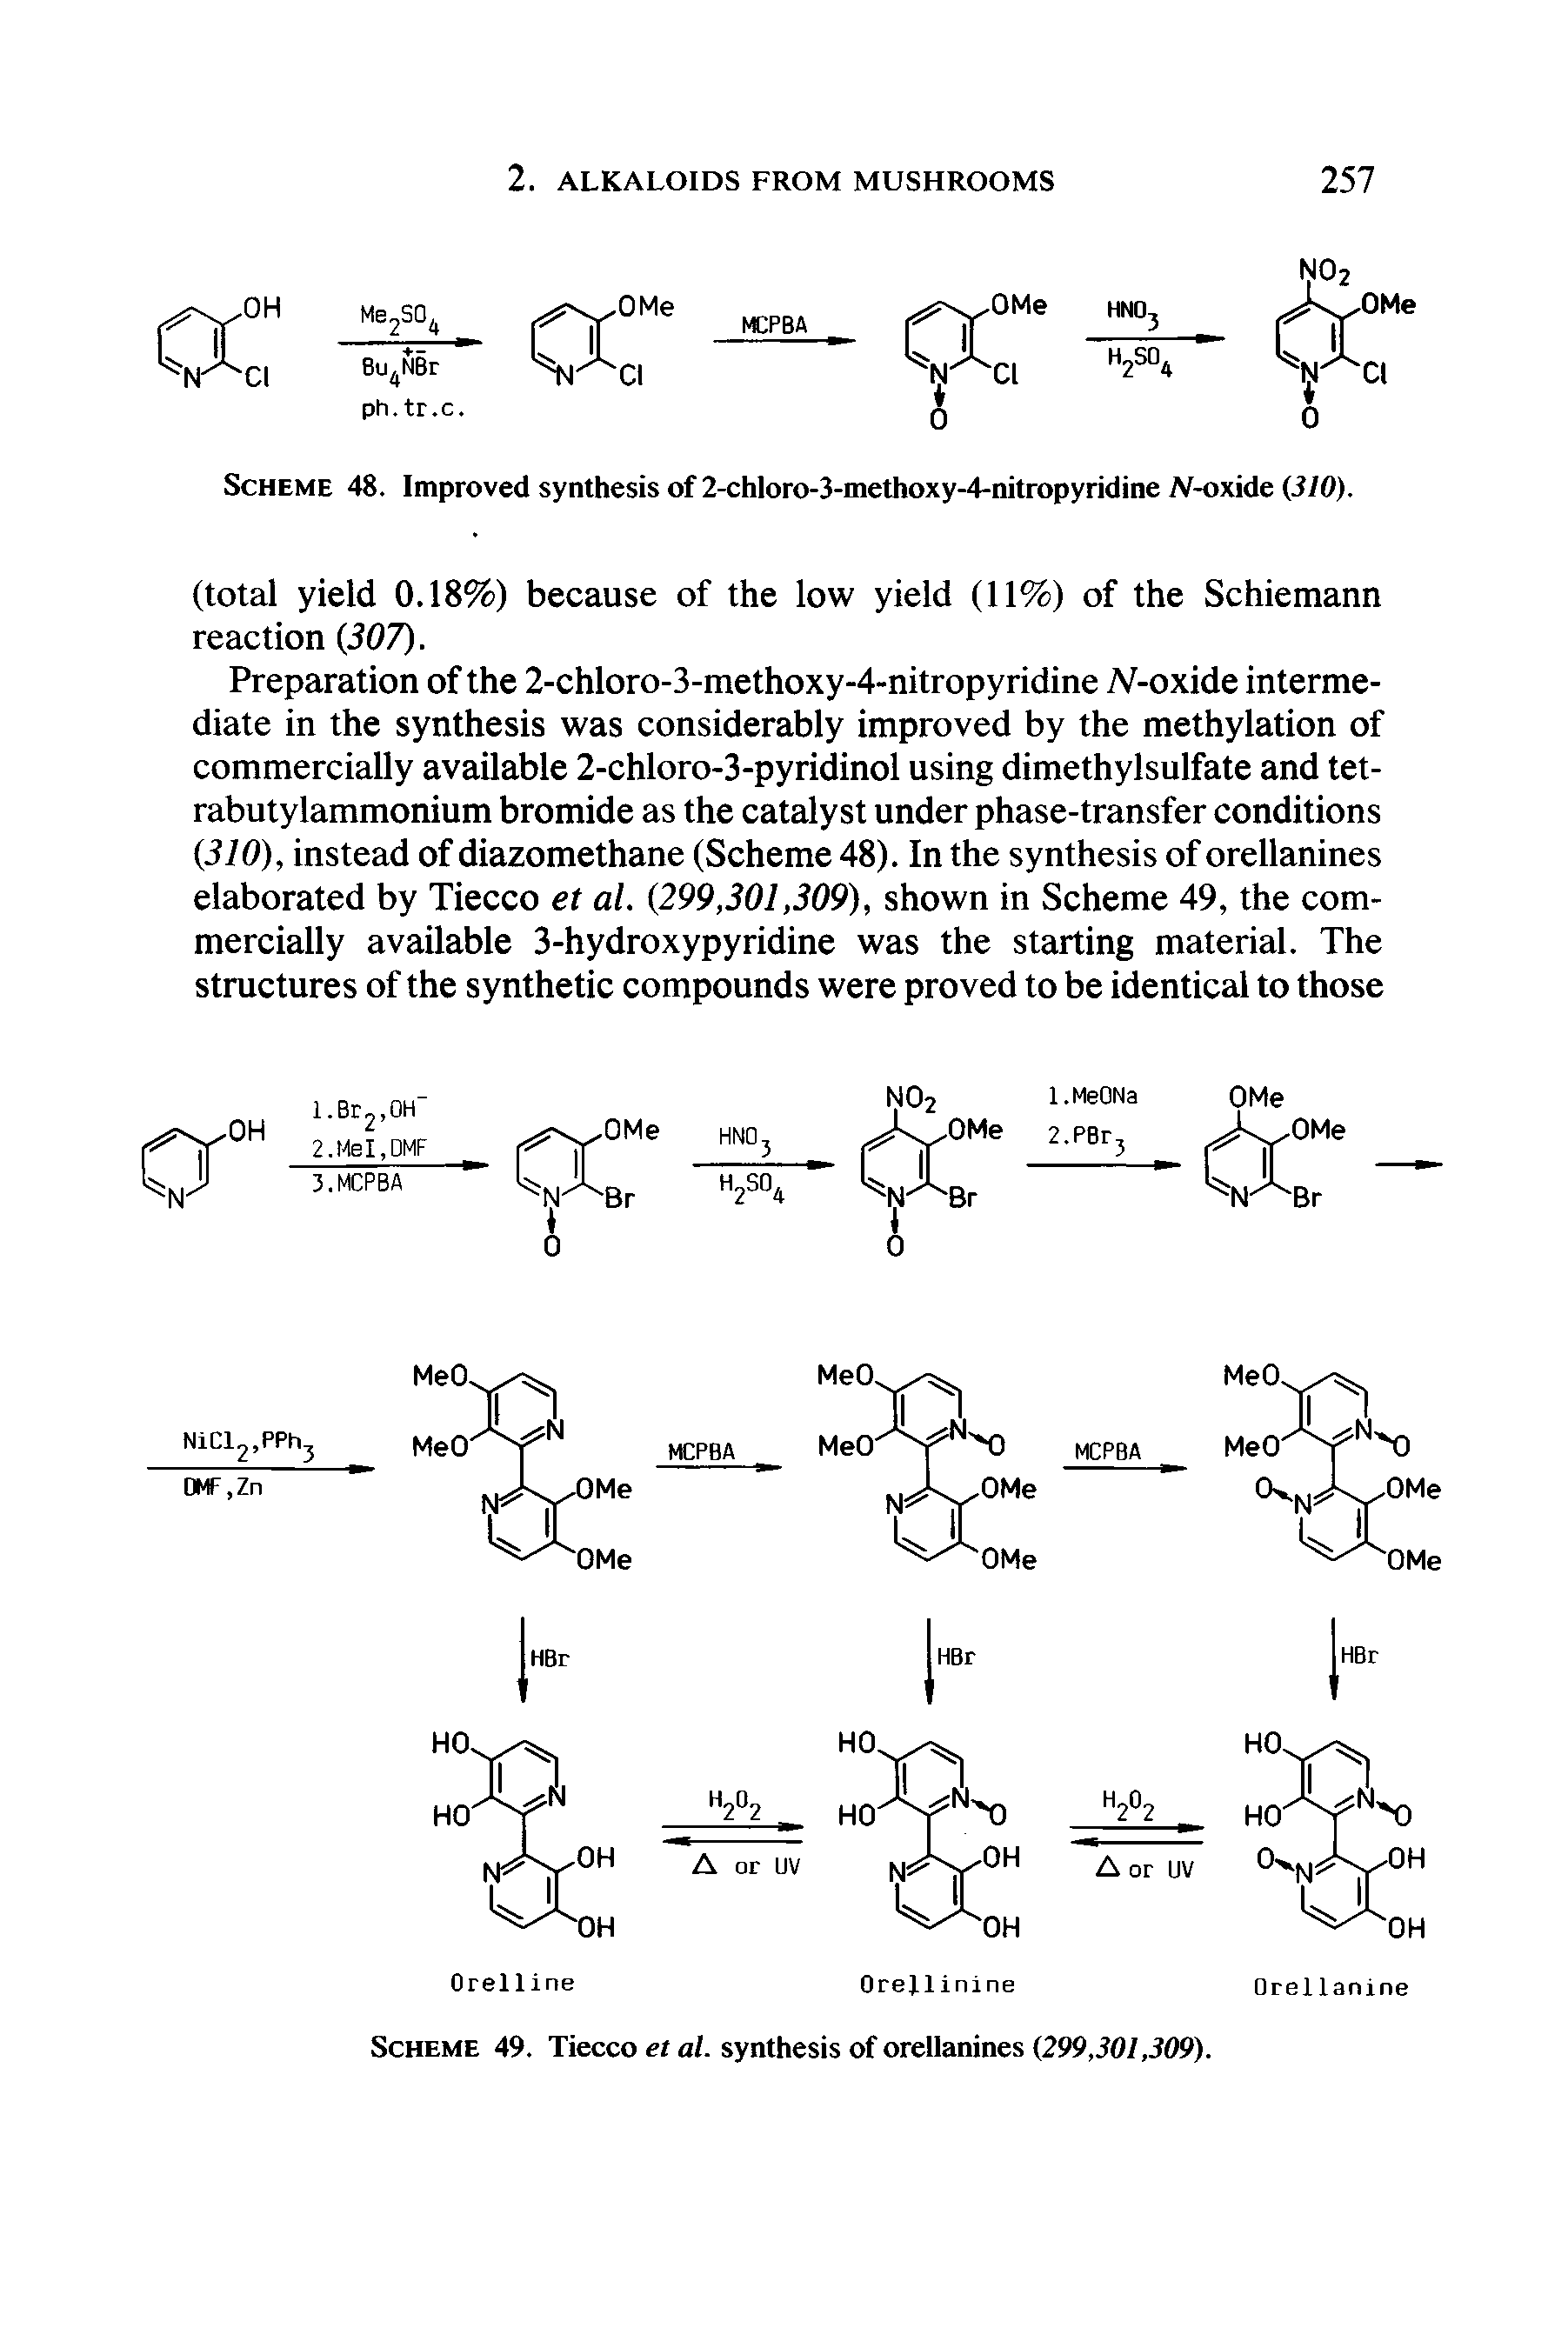 Scheme 48. Improved synthesis of 2-chloro-3-methoxy-4-nitropyridine N-oxide 310).